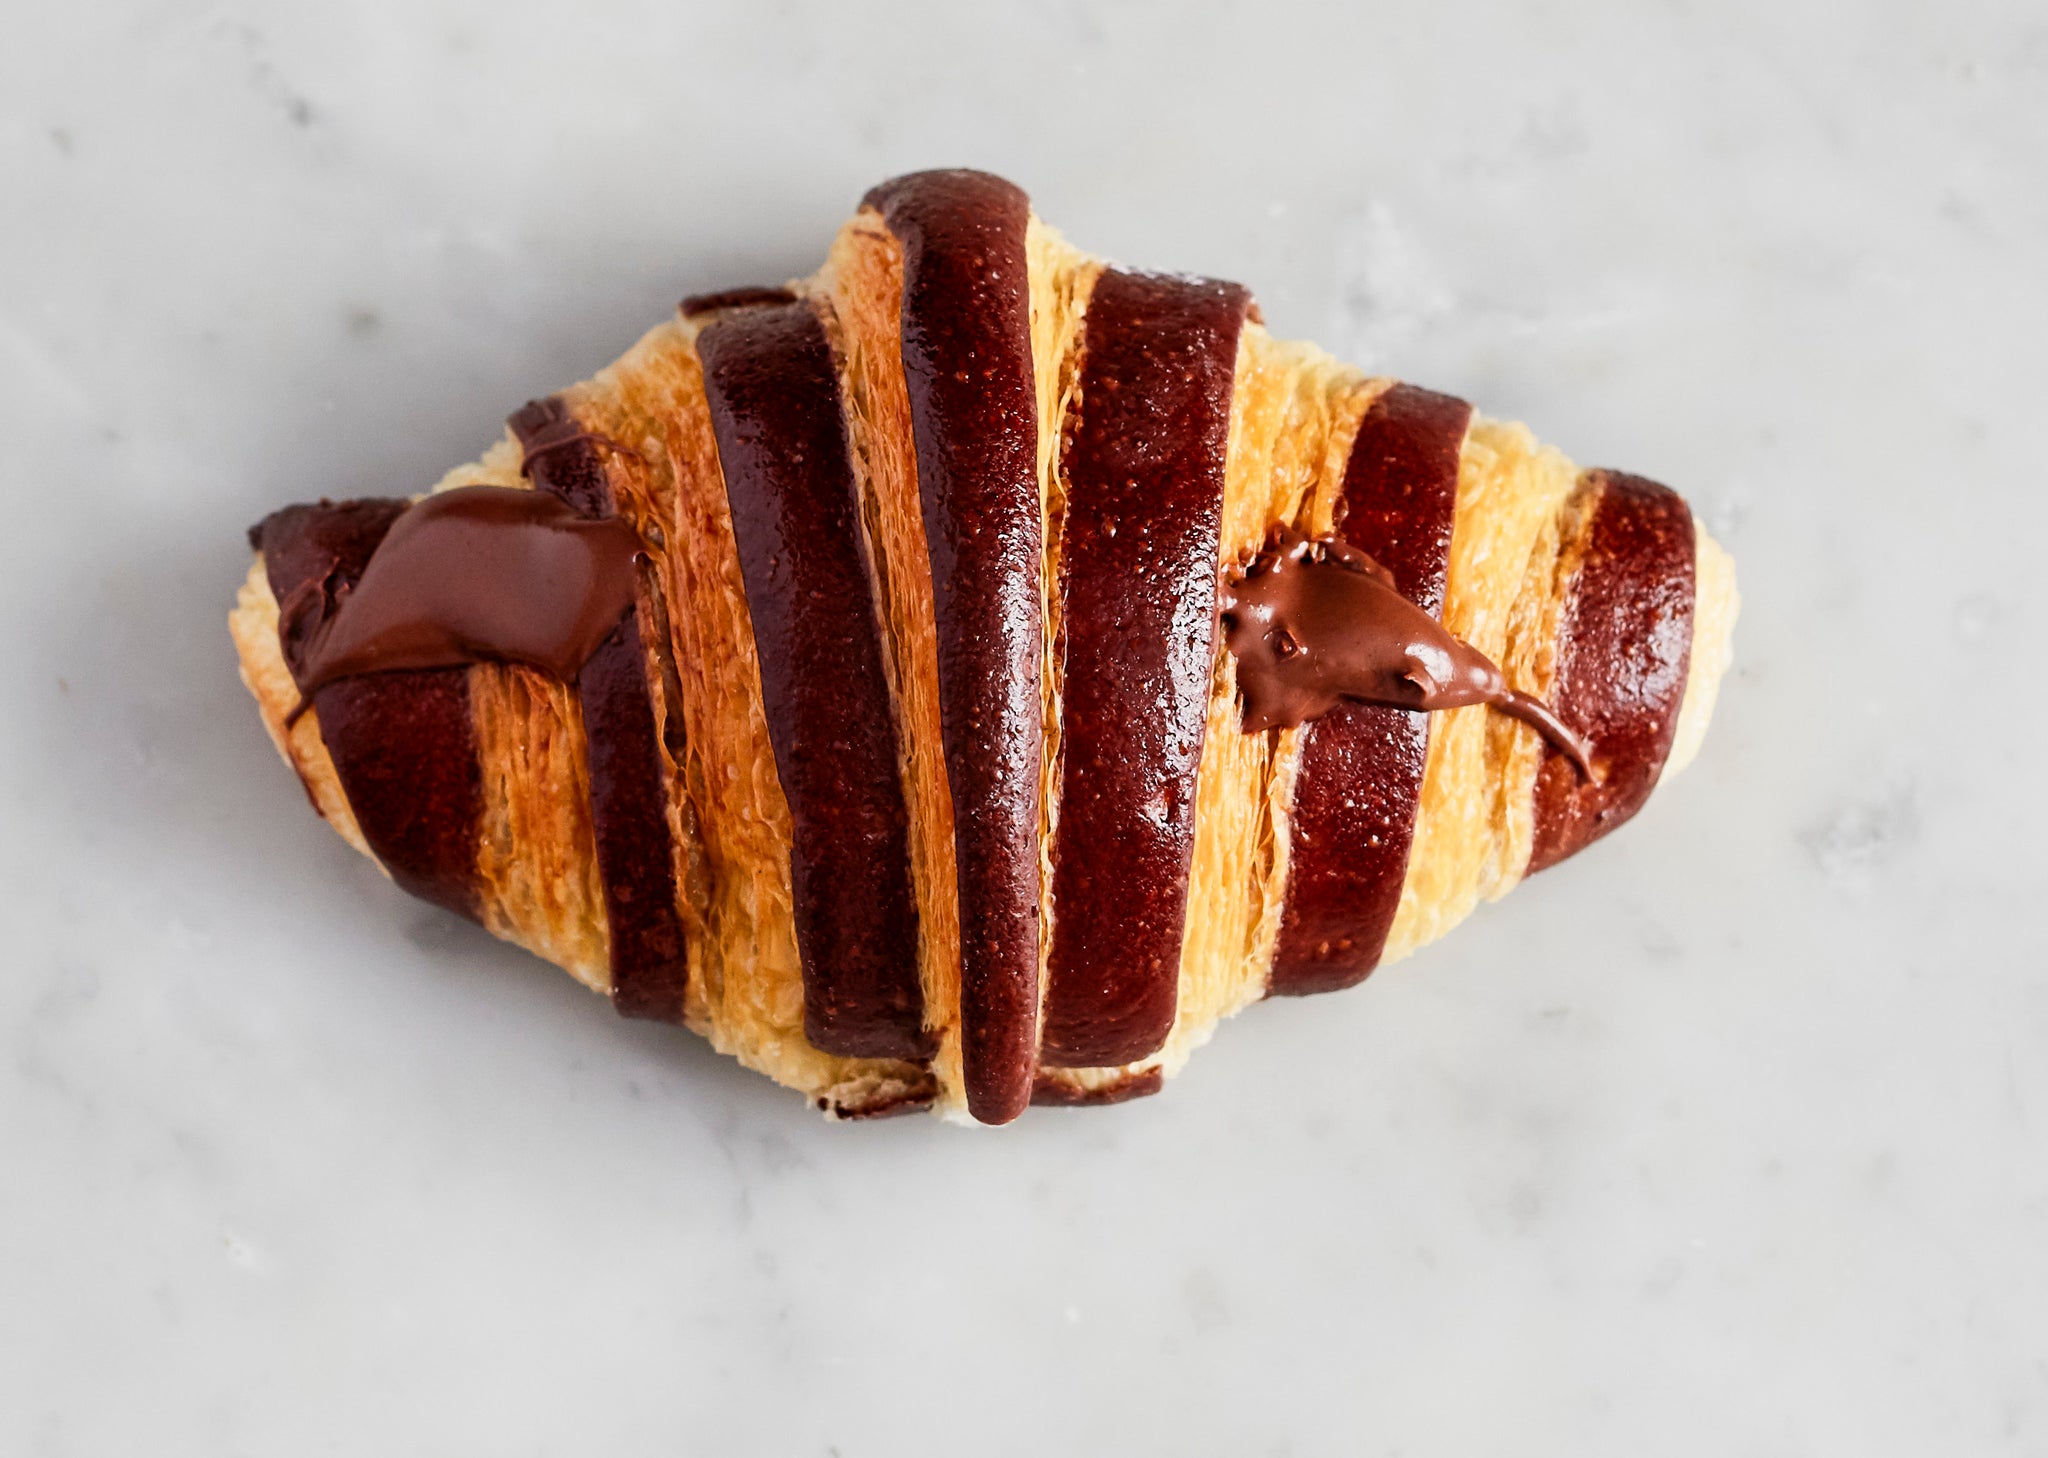 Croissant Nutella – OREE BOULANGERIES